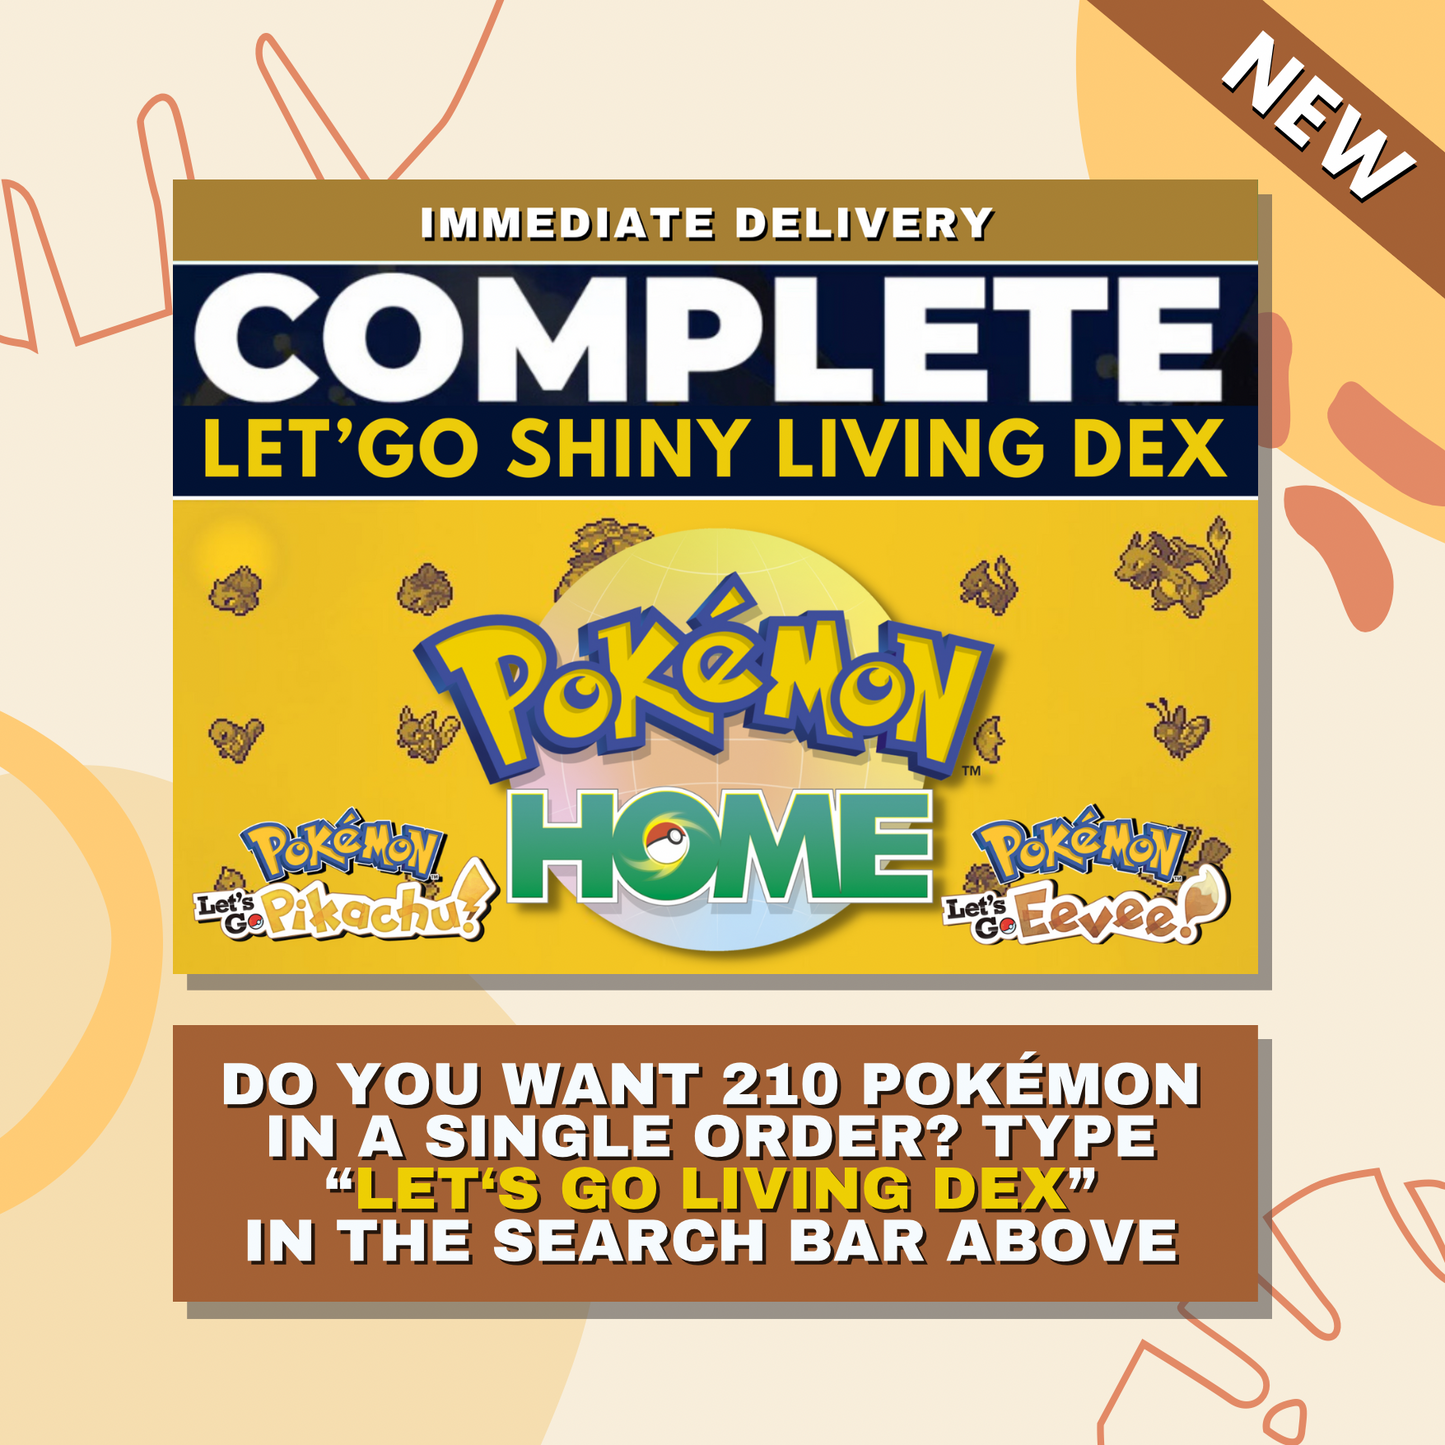 Kabutops Shiny ✨ or Non Shiny Pokémon Let's Go Pikachu Eevee Level 100 Competitive Battle Ready 6 IV 100% Legit Legal Customizable Custom OT by Shiny Living Dex | Shiny Living Dex